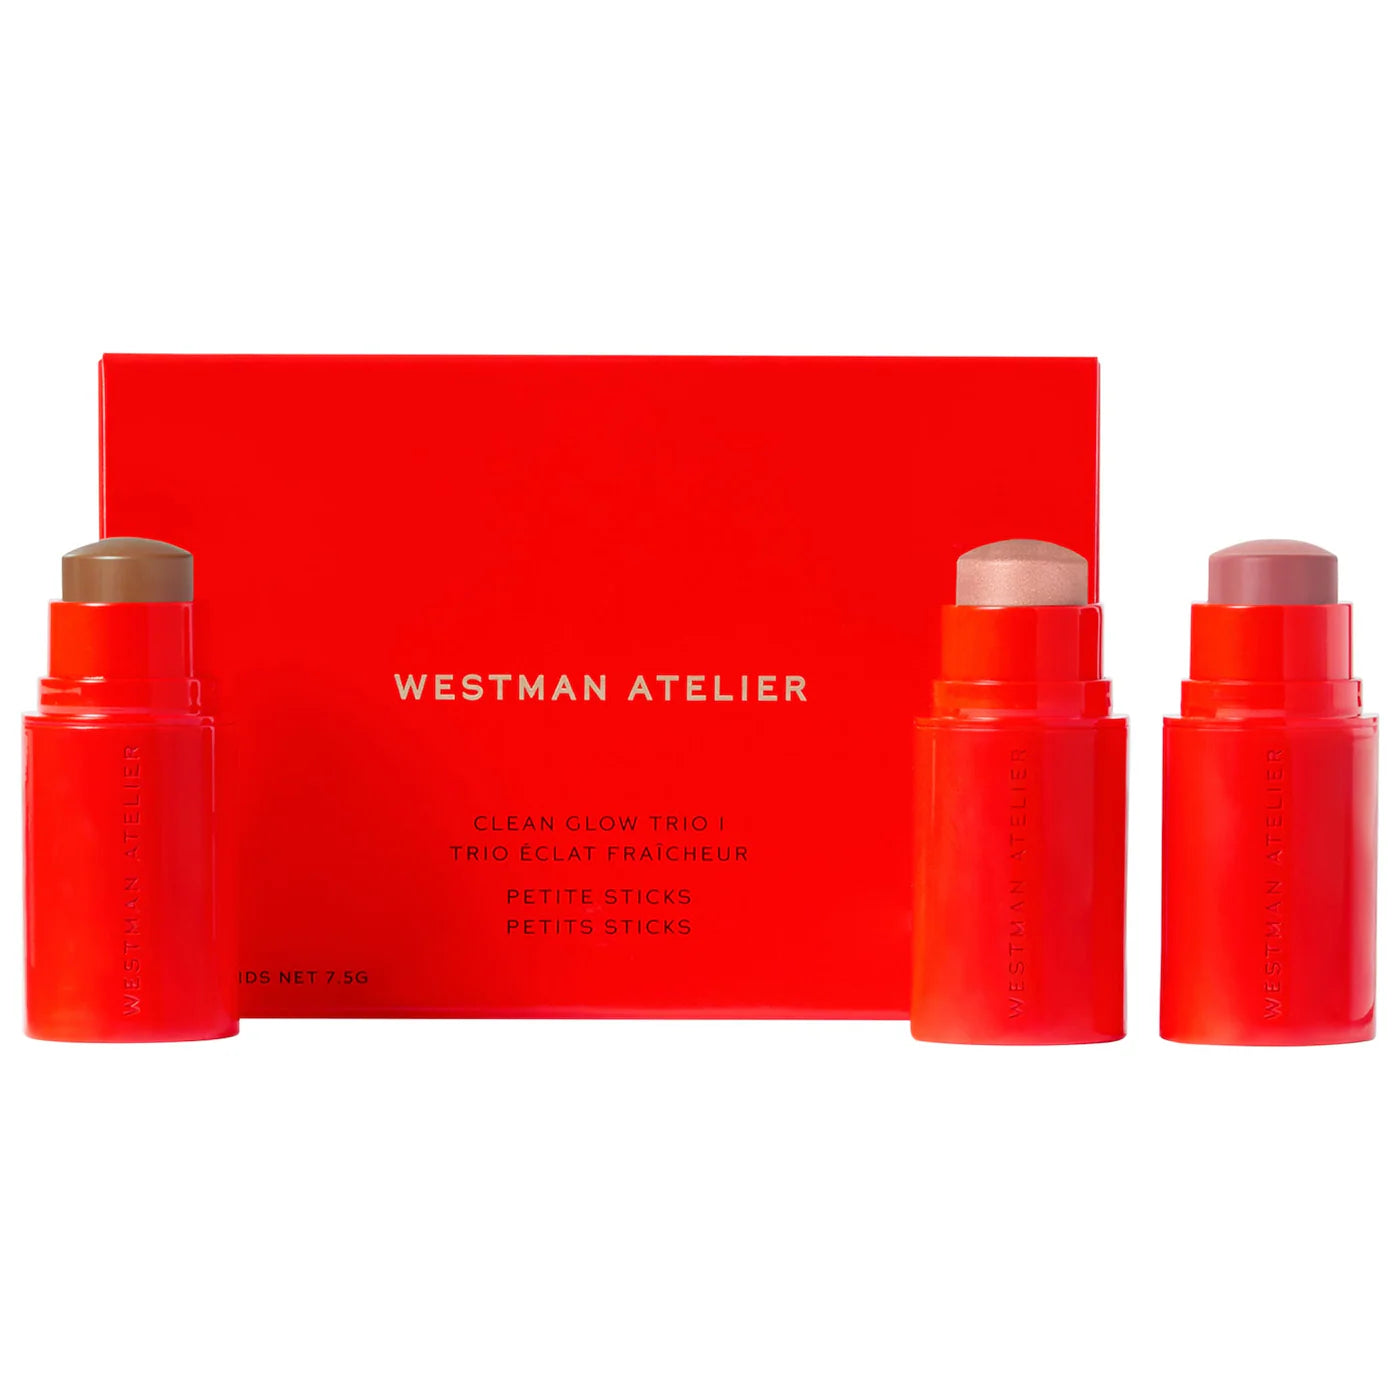 Westman Atelier Mini Contour, Highlight & Blush Trio - Color: I: Nectar, Biscuit, Petal